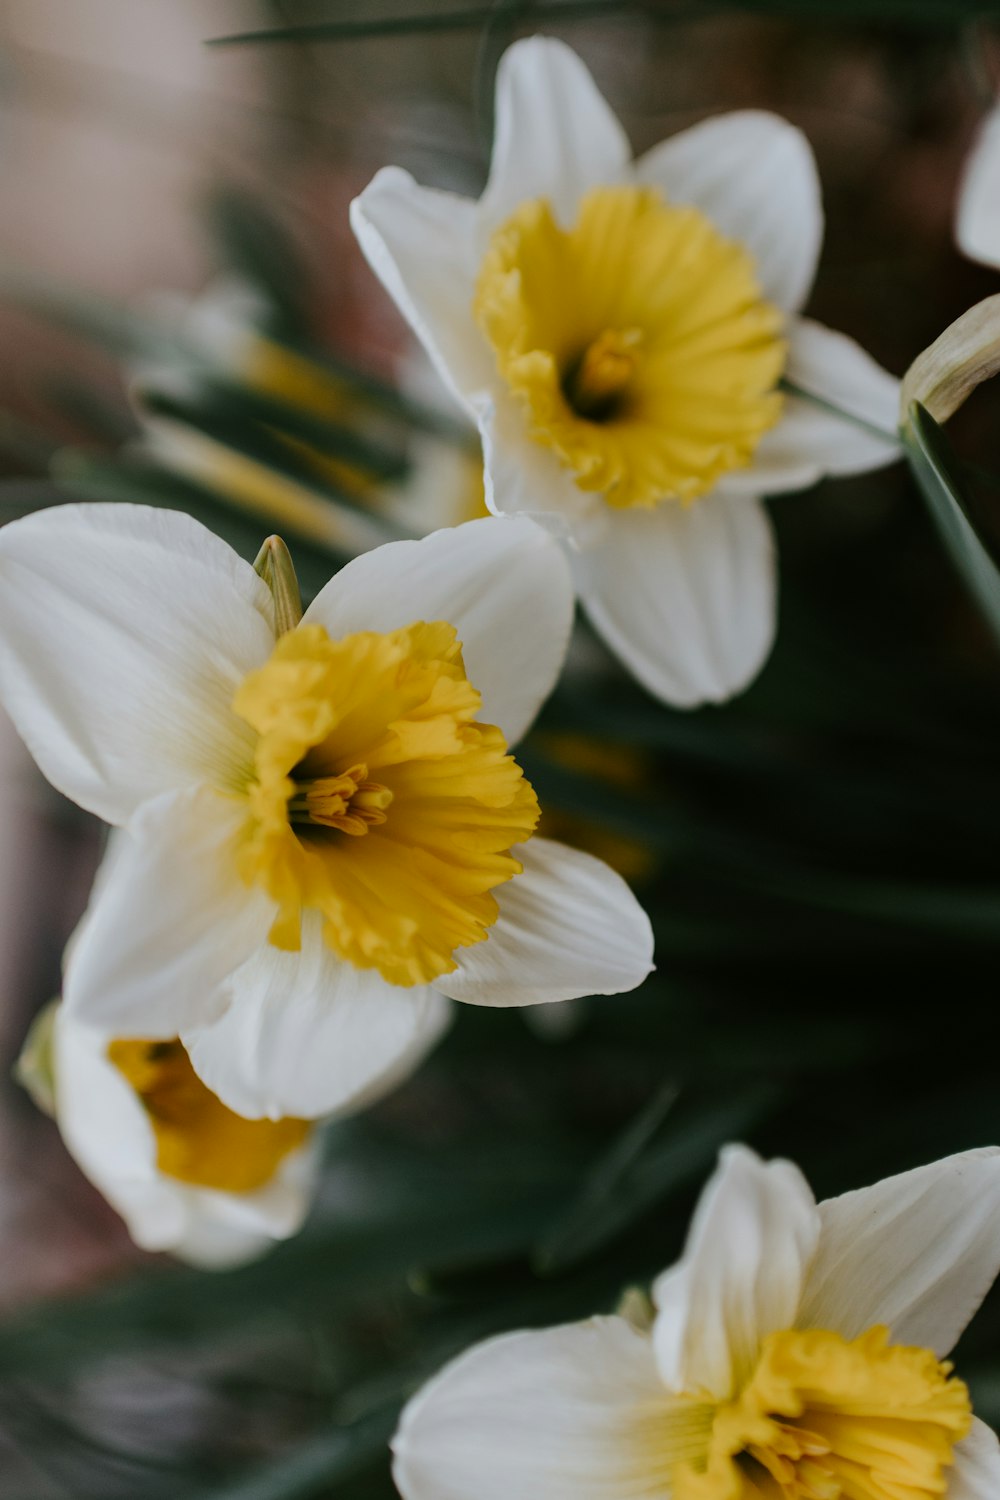 fiore bianco e giallo in lente tilt shift